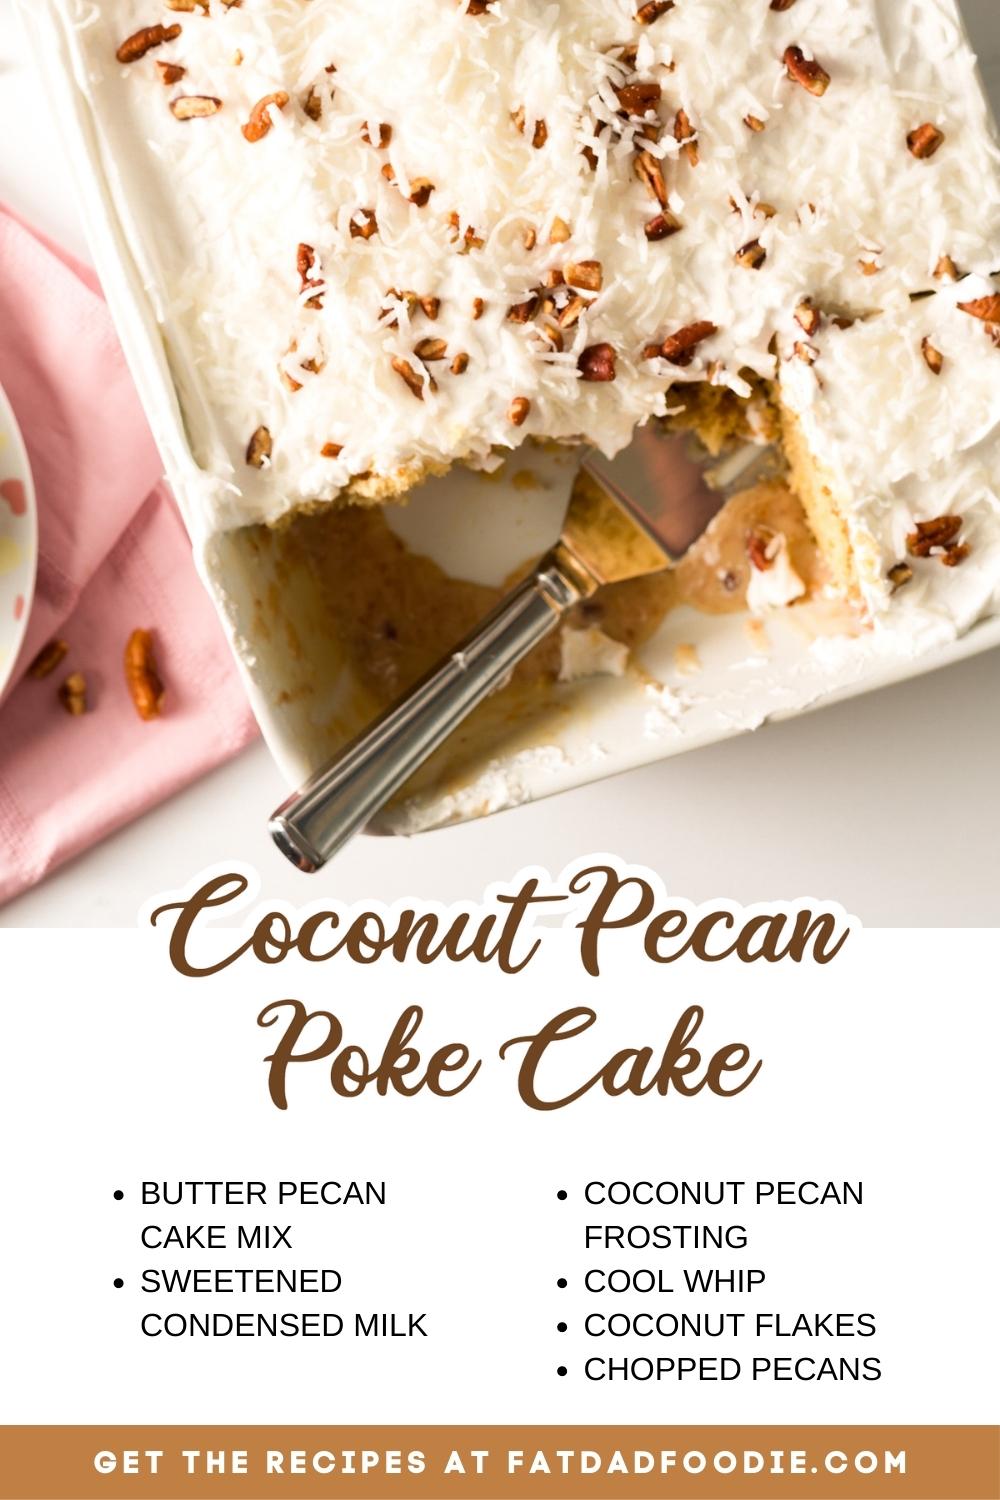 coconut pecan poke cake ingredients list